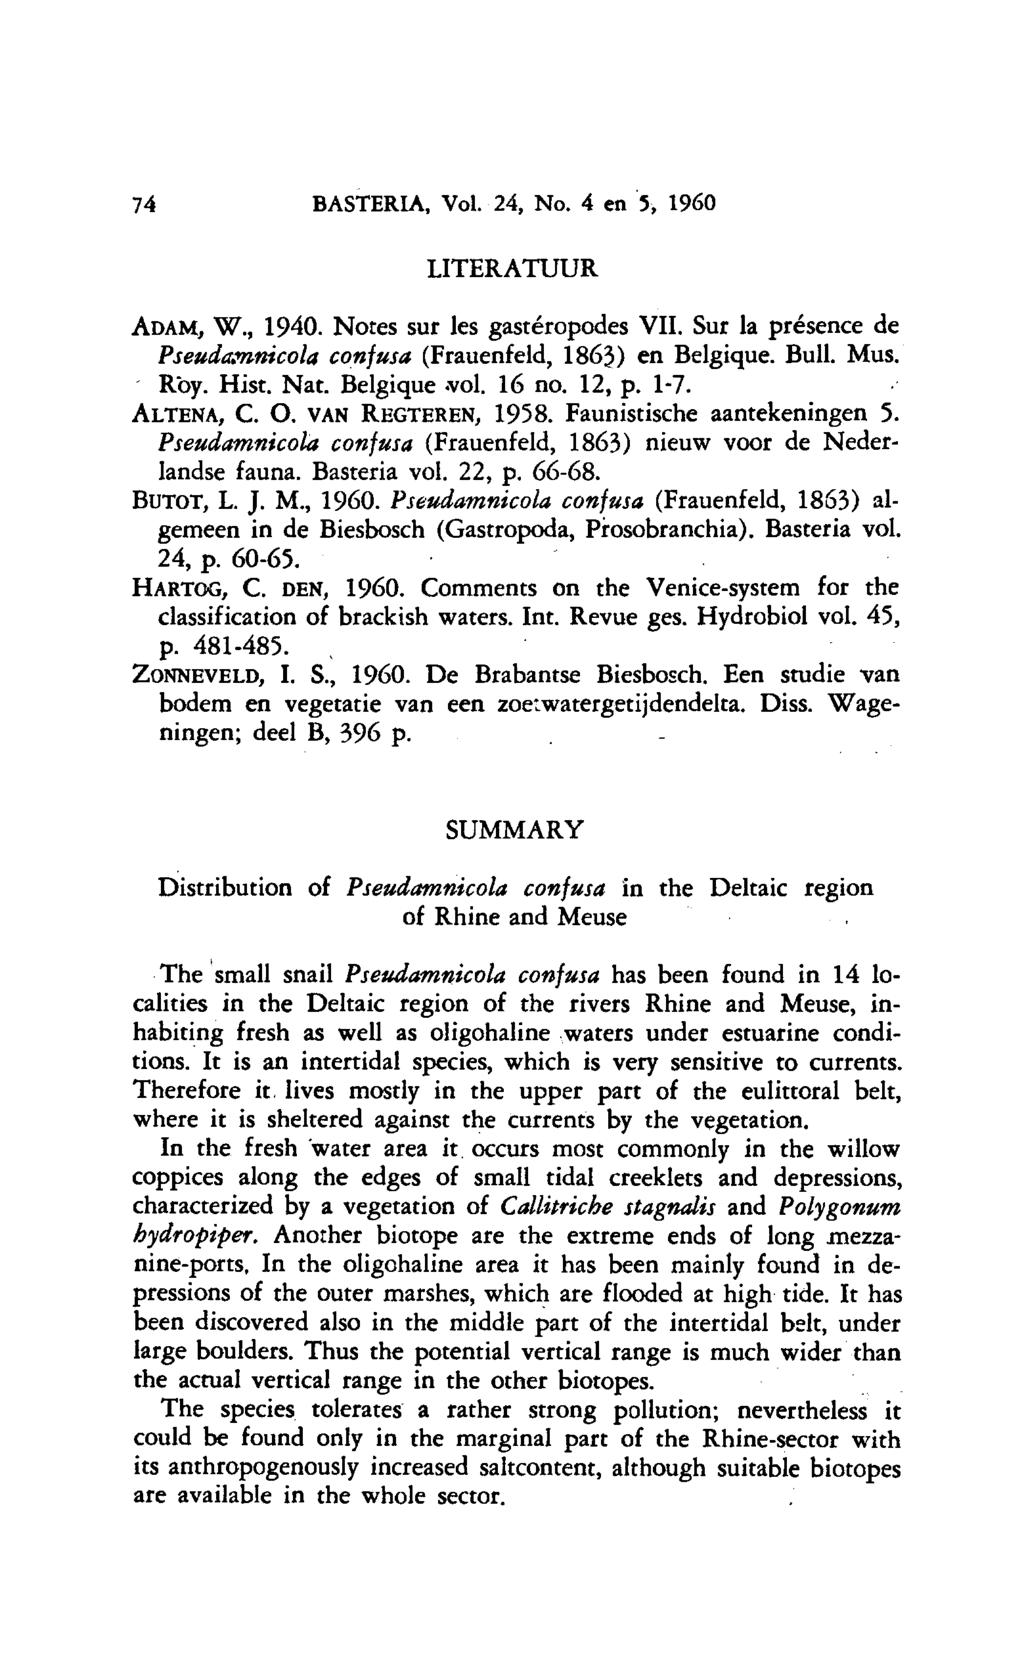 74 BASTERIA, Vol. 24, No. 4 en 5, 1960 LITERATUUR ADAM, W., 1940. Notes sur les gastéropodes VII. Sur la présence de Pseudamnicola confusa (Frauenfeld, 1863) en Belgique. Buil. Mus. Roy. Hist. Nat.